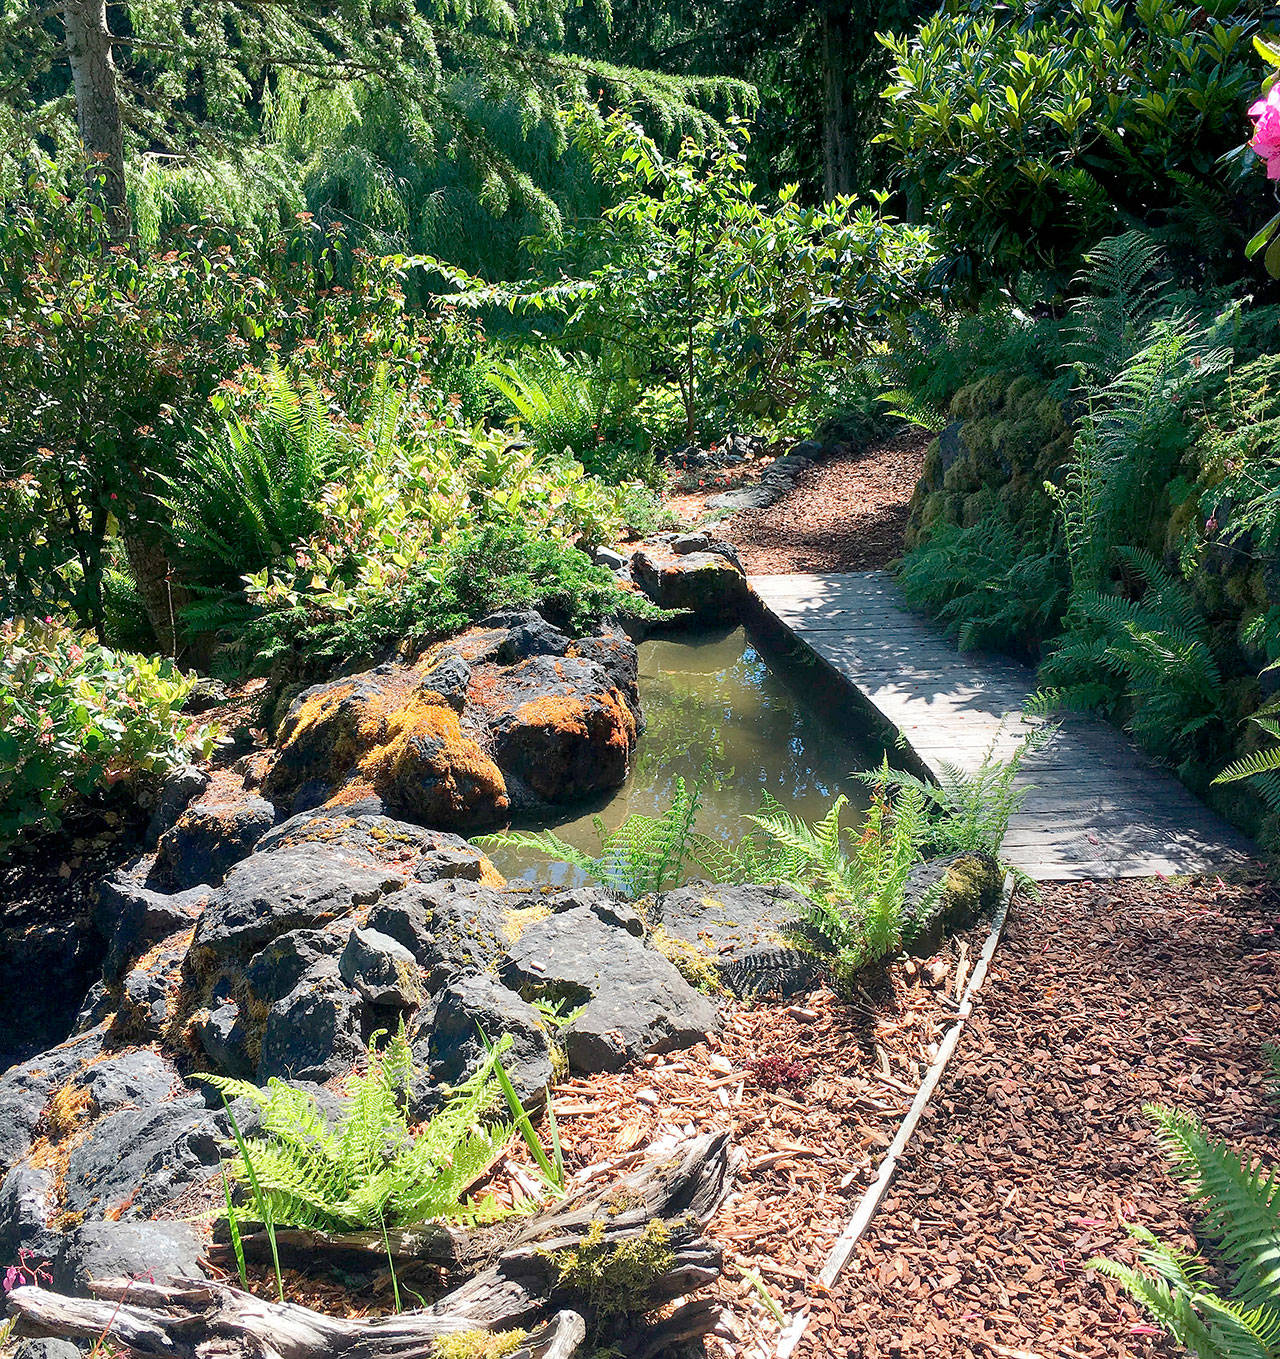 Petals Pathways: Annual tour features six breathtaking peninsula gardens